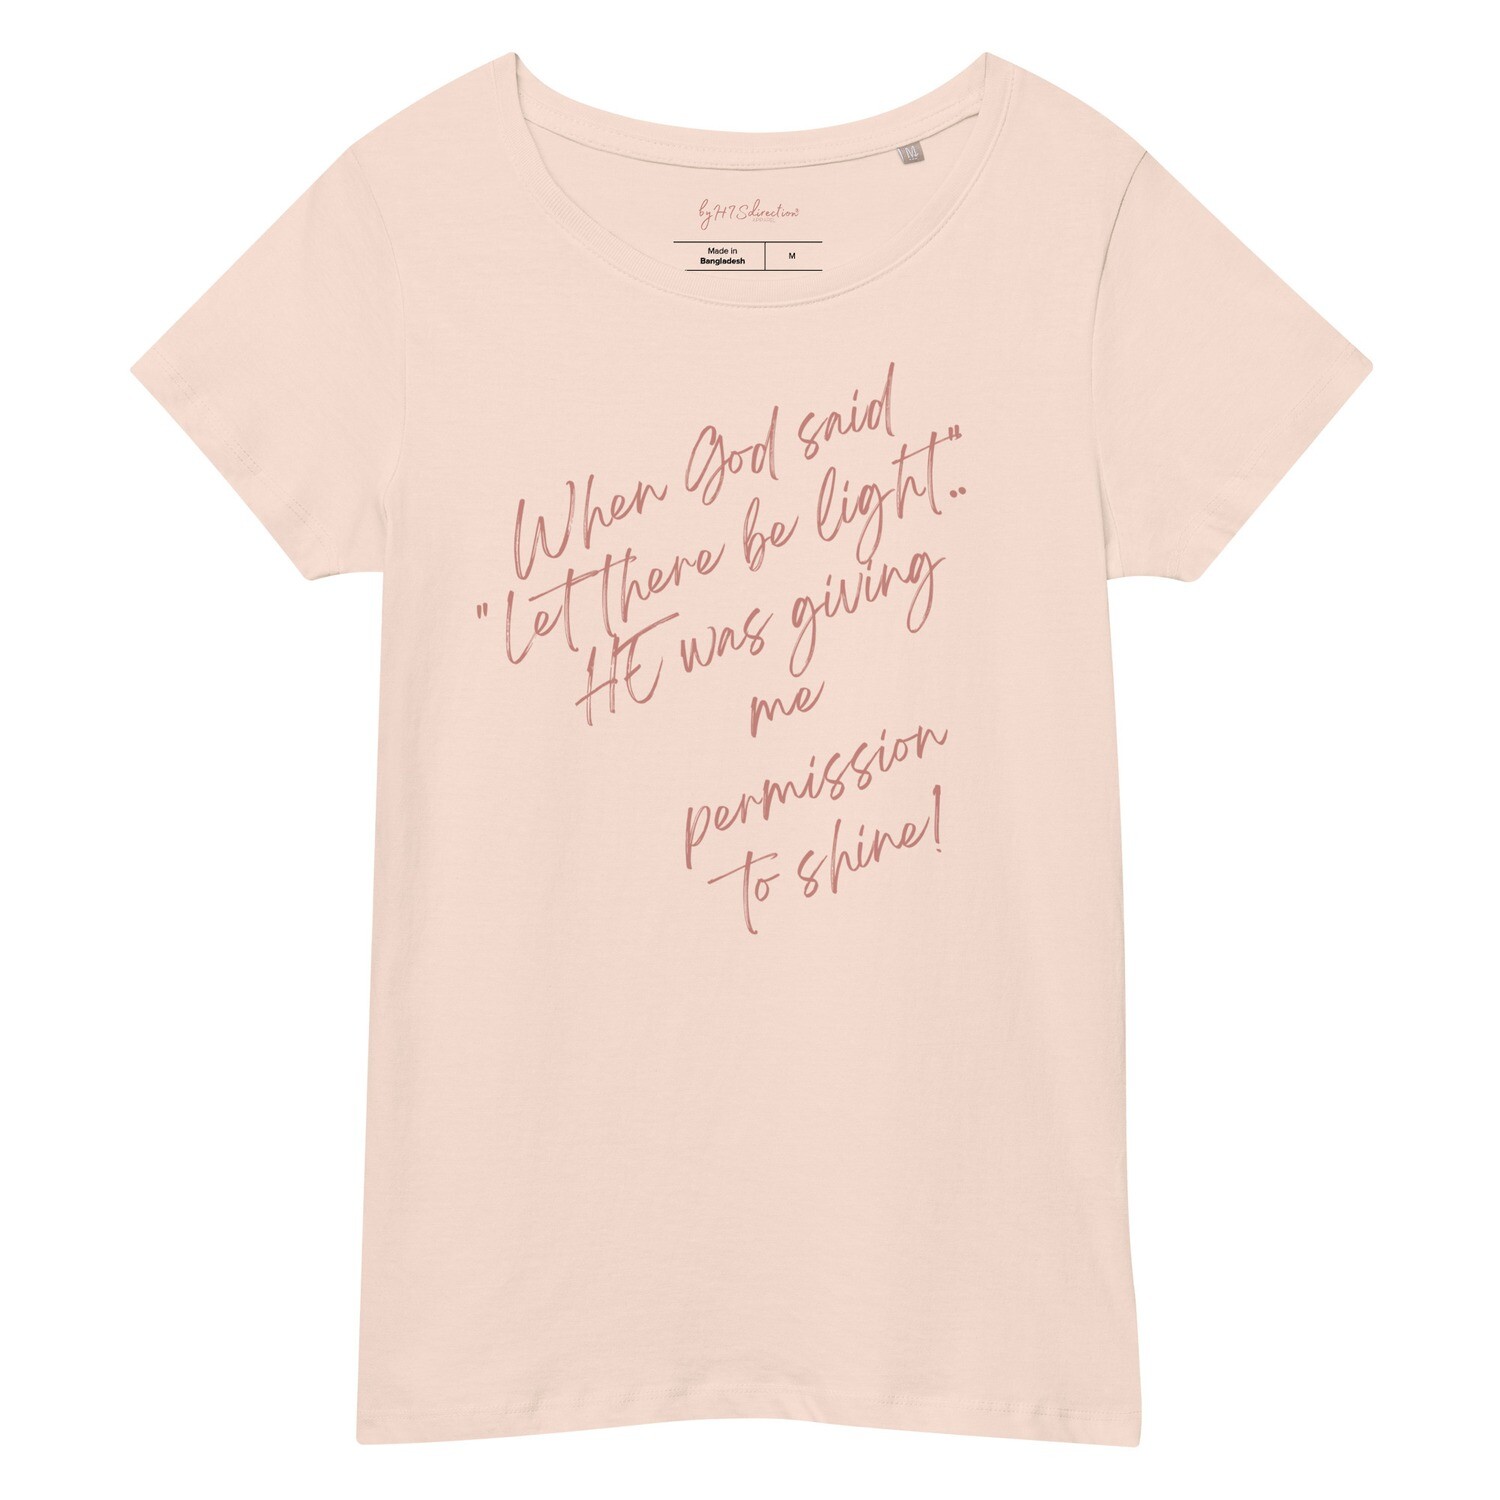 Let There Be Light - Women’s basic organic t-shirt